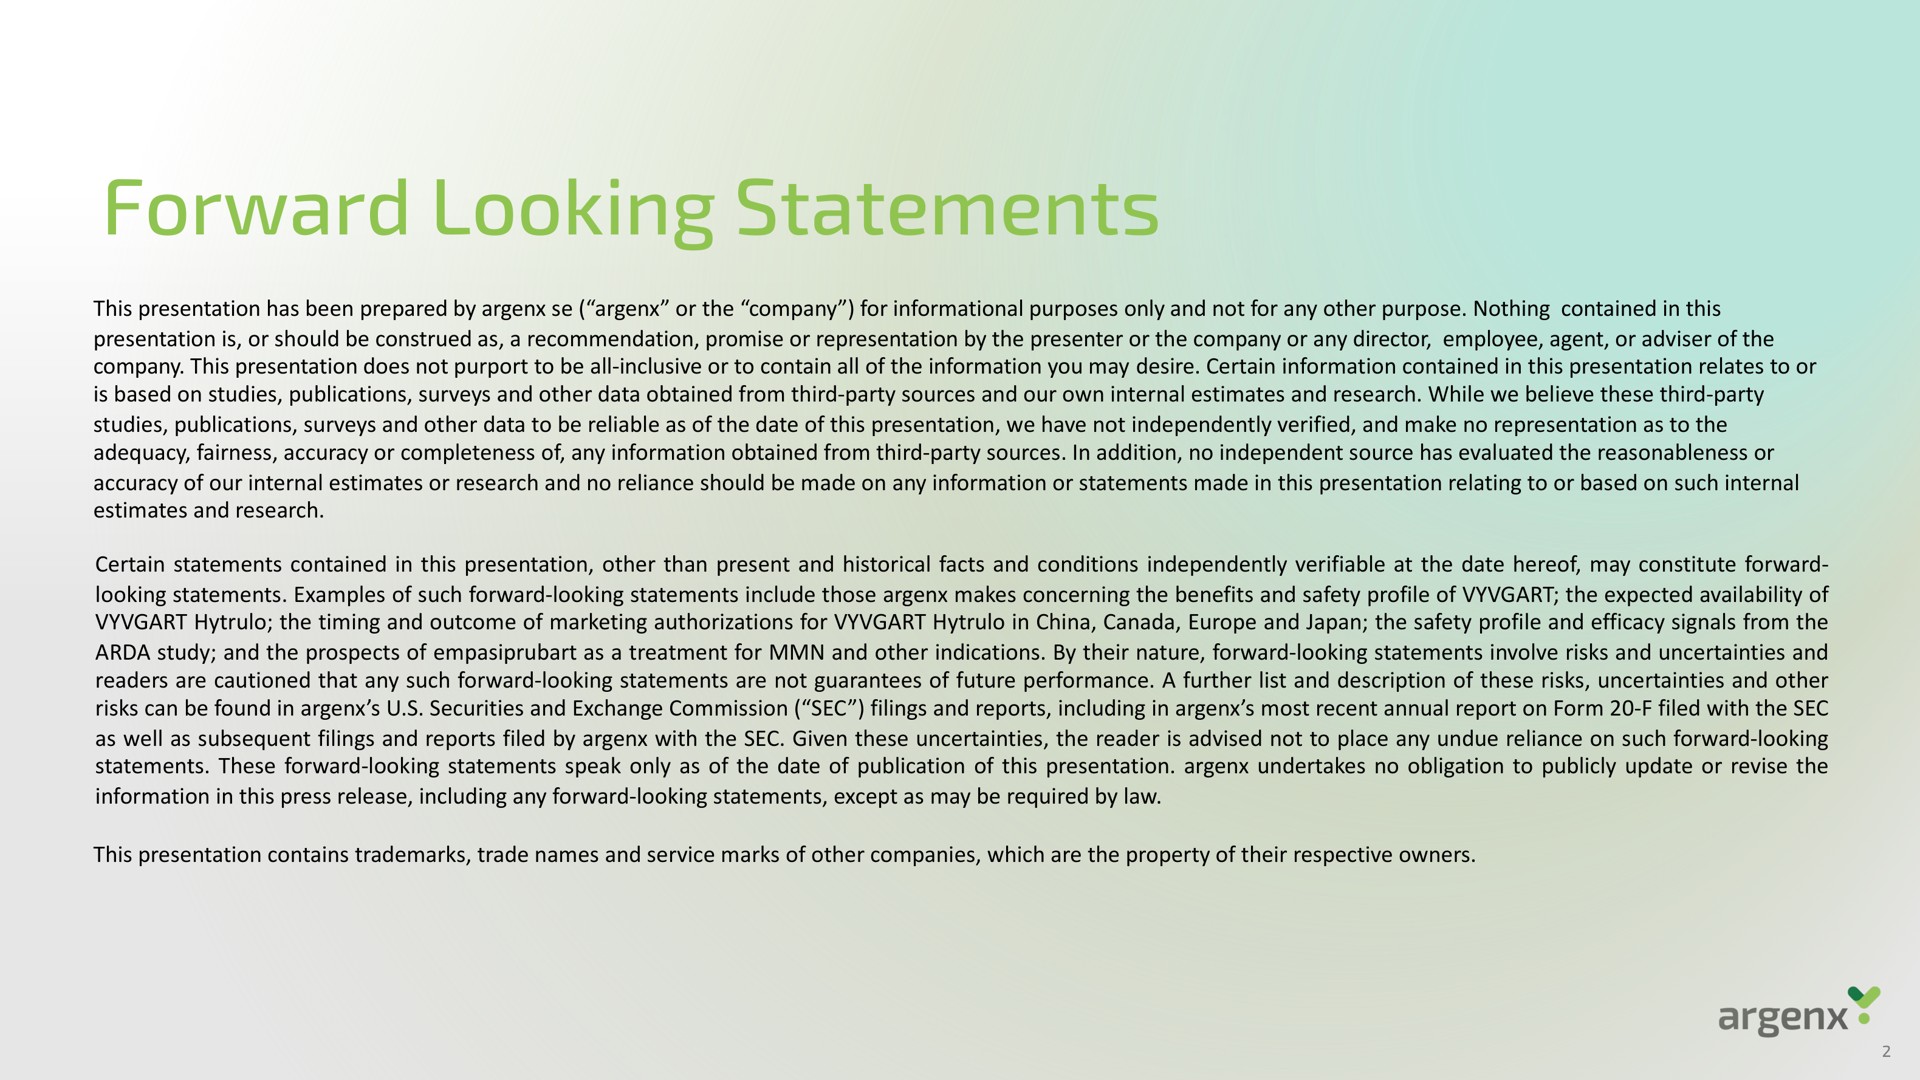 forward looking statements | argenx SE